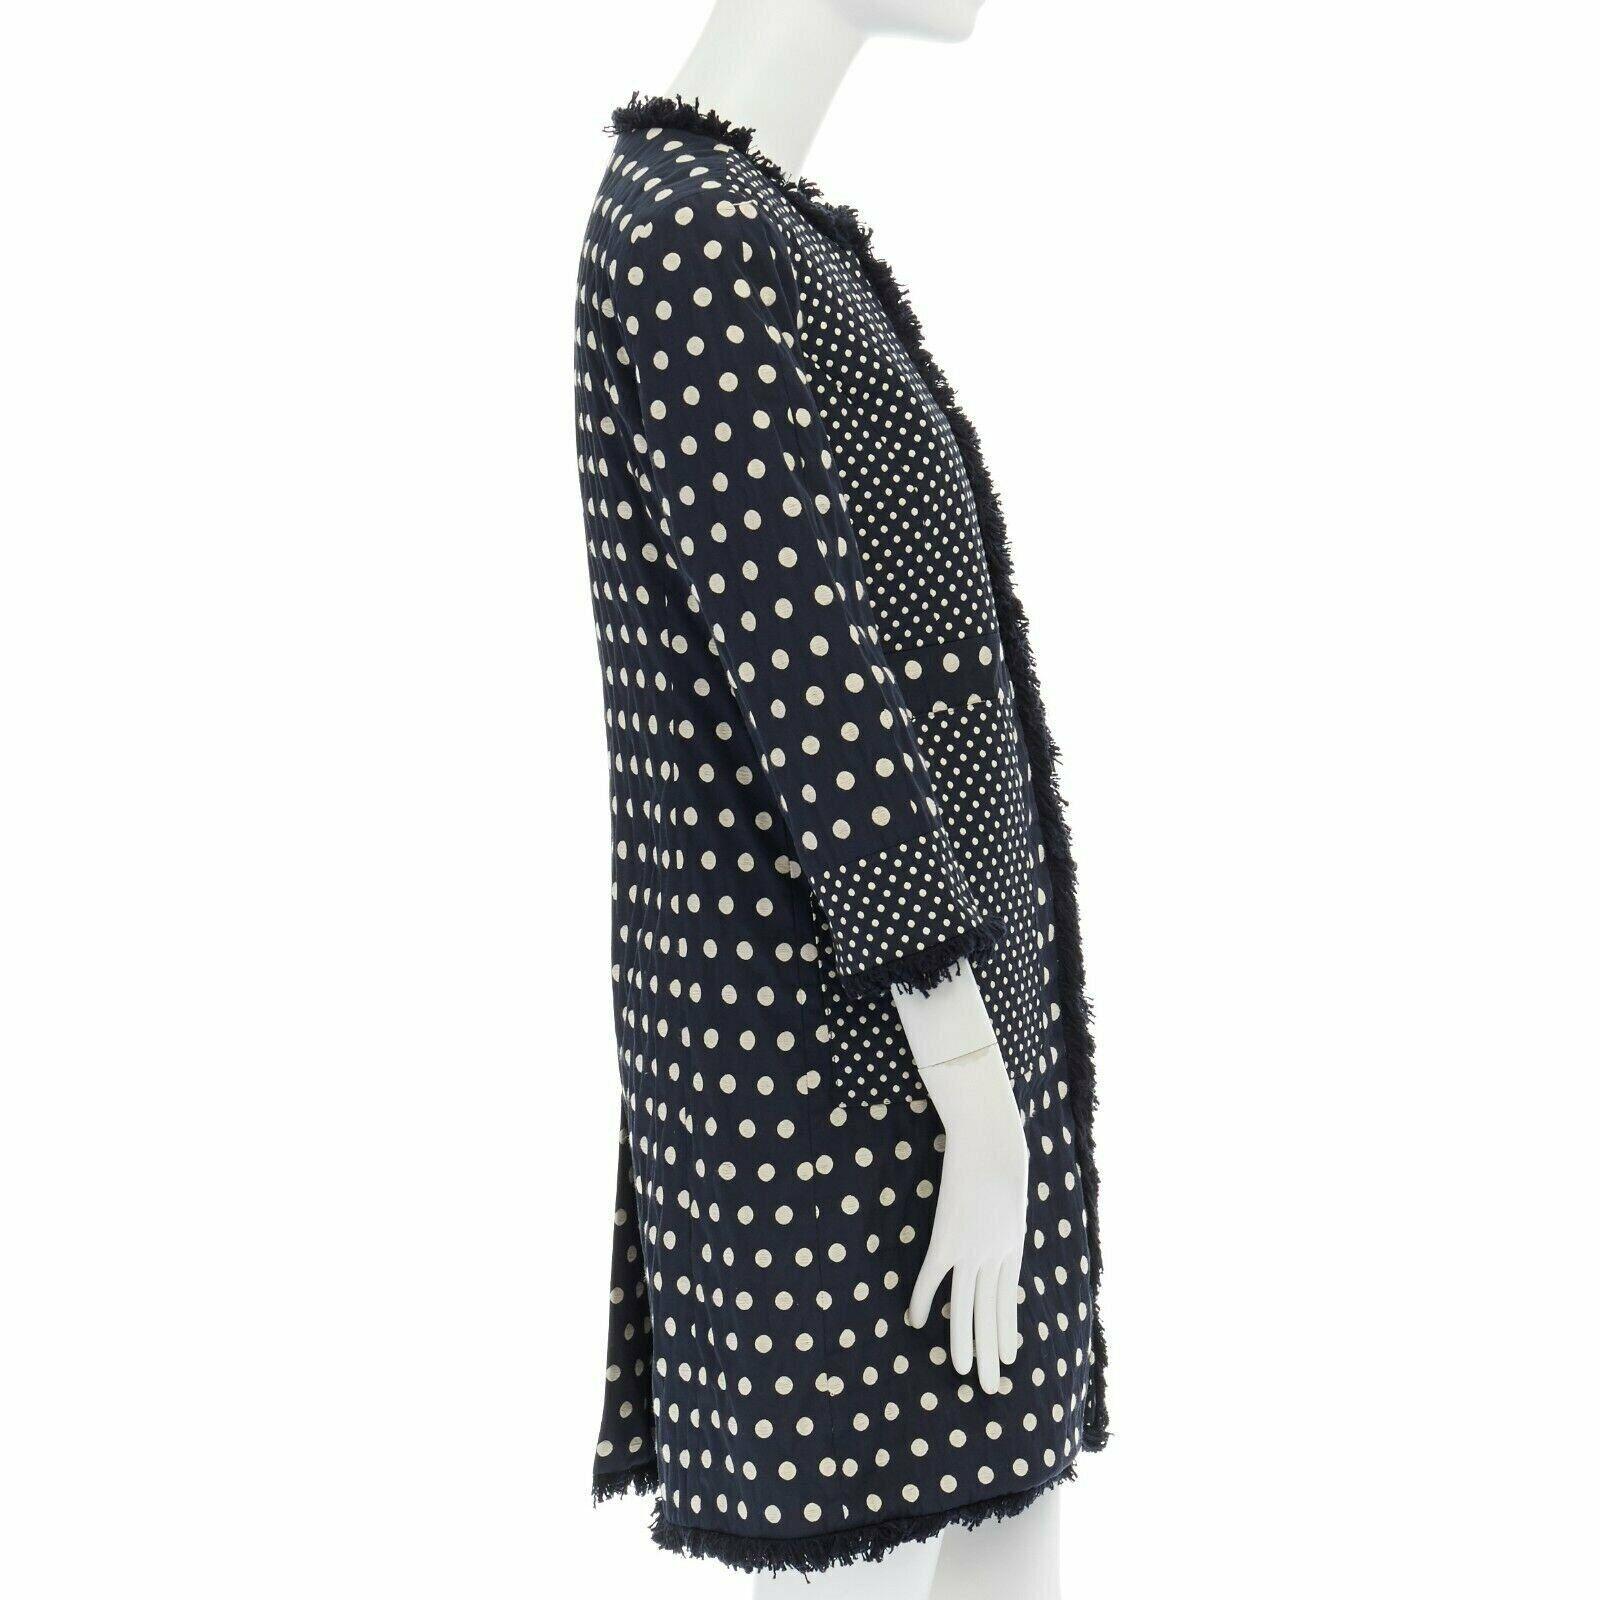 Black TORY BURCH navy blue white polka dot jacquard frayed trimmed coat US2 S For Sale